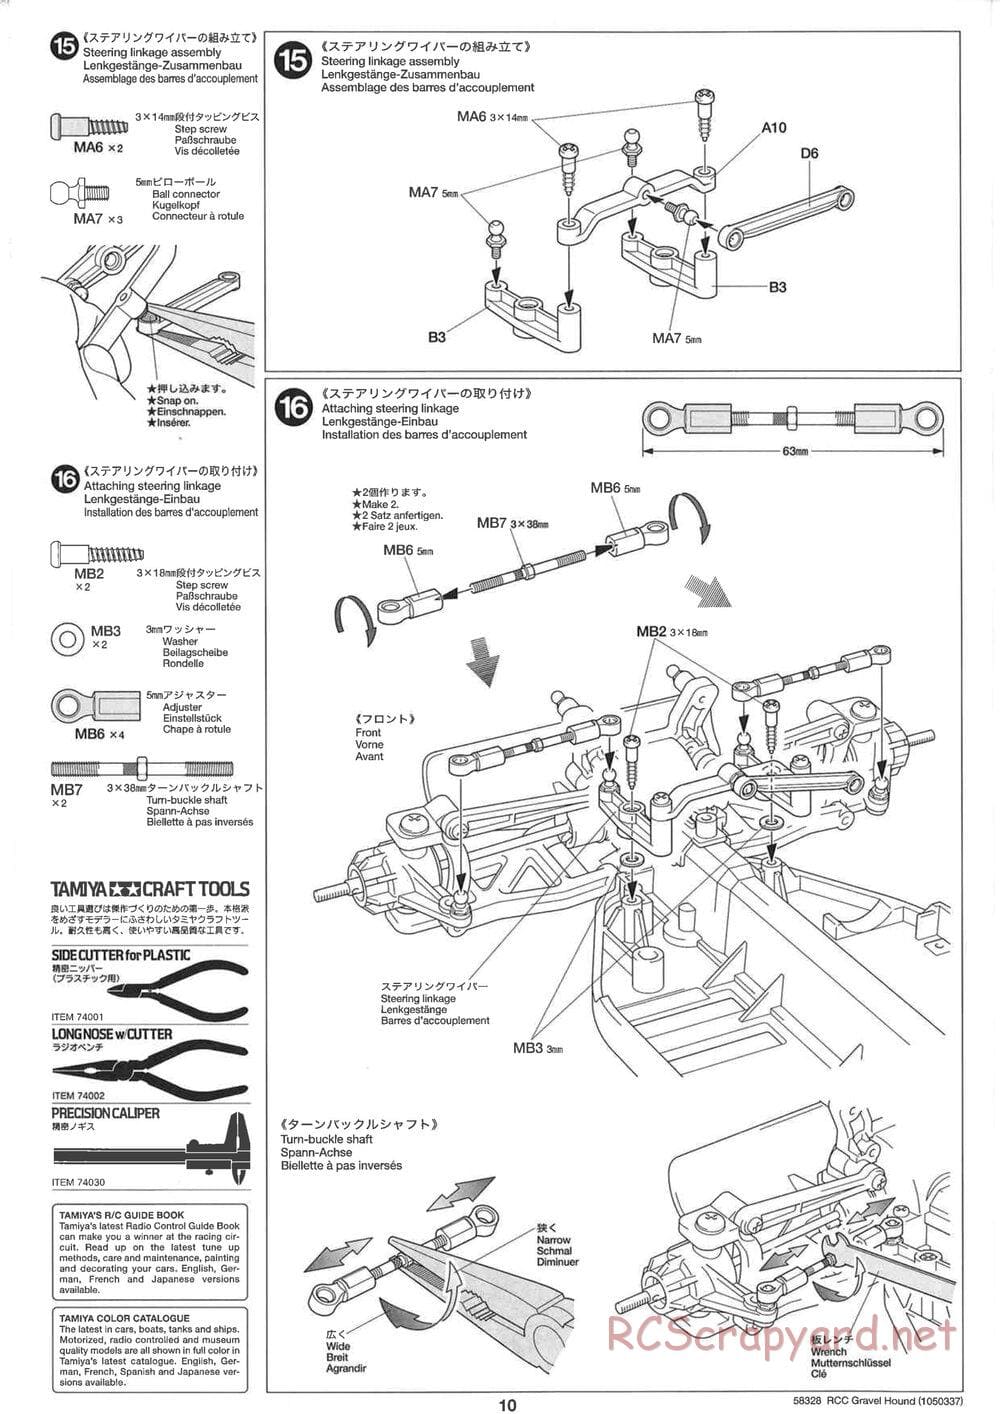 Tamiya - Gravel Hound Chassis - Manual - Page 10